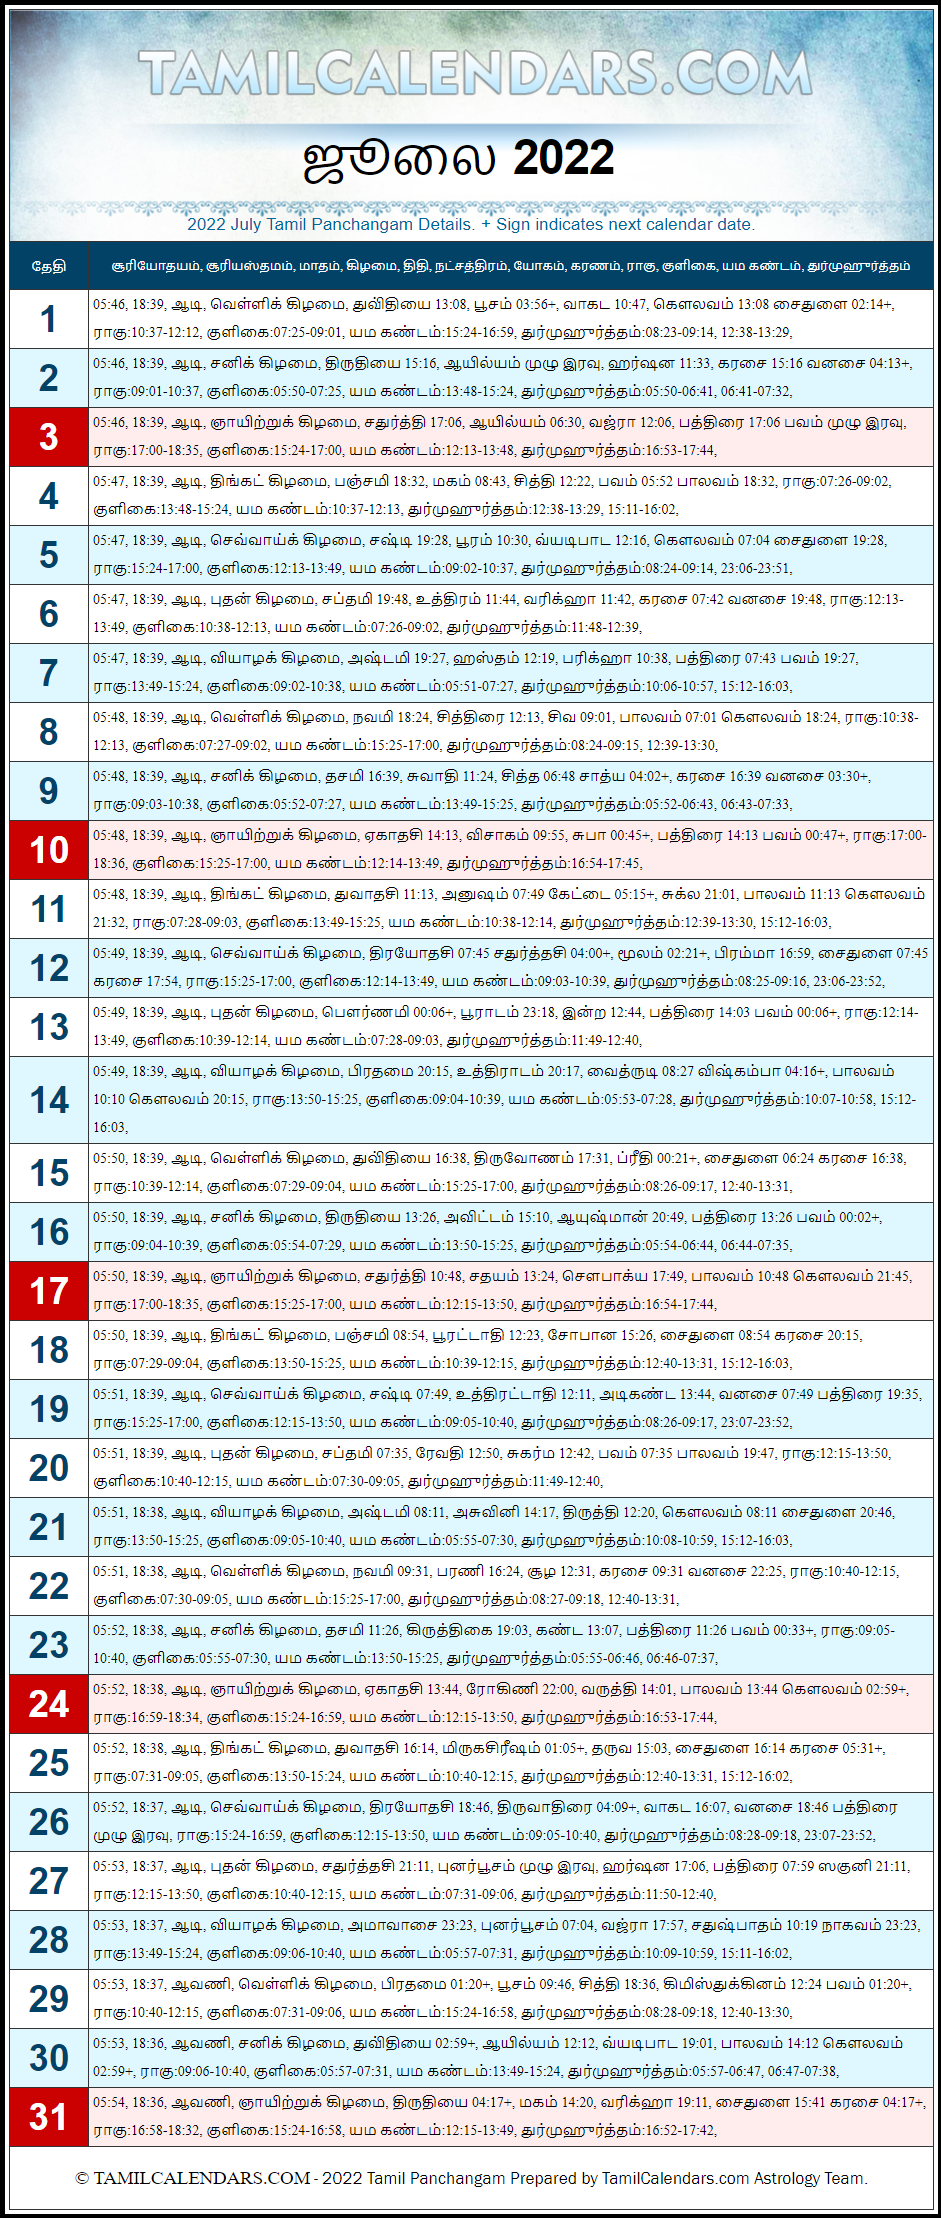 July 2022 Tamil Panchangam